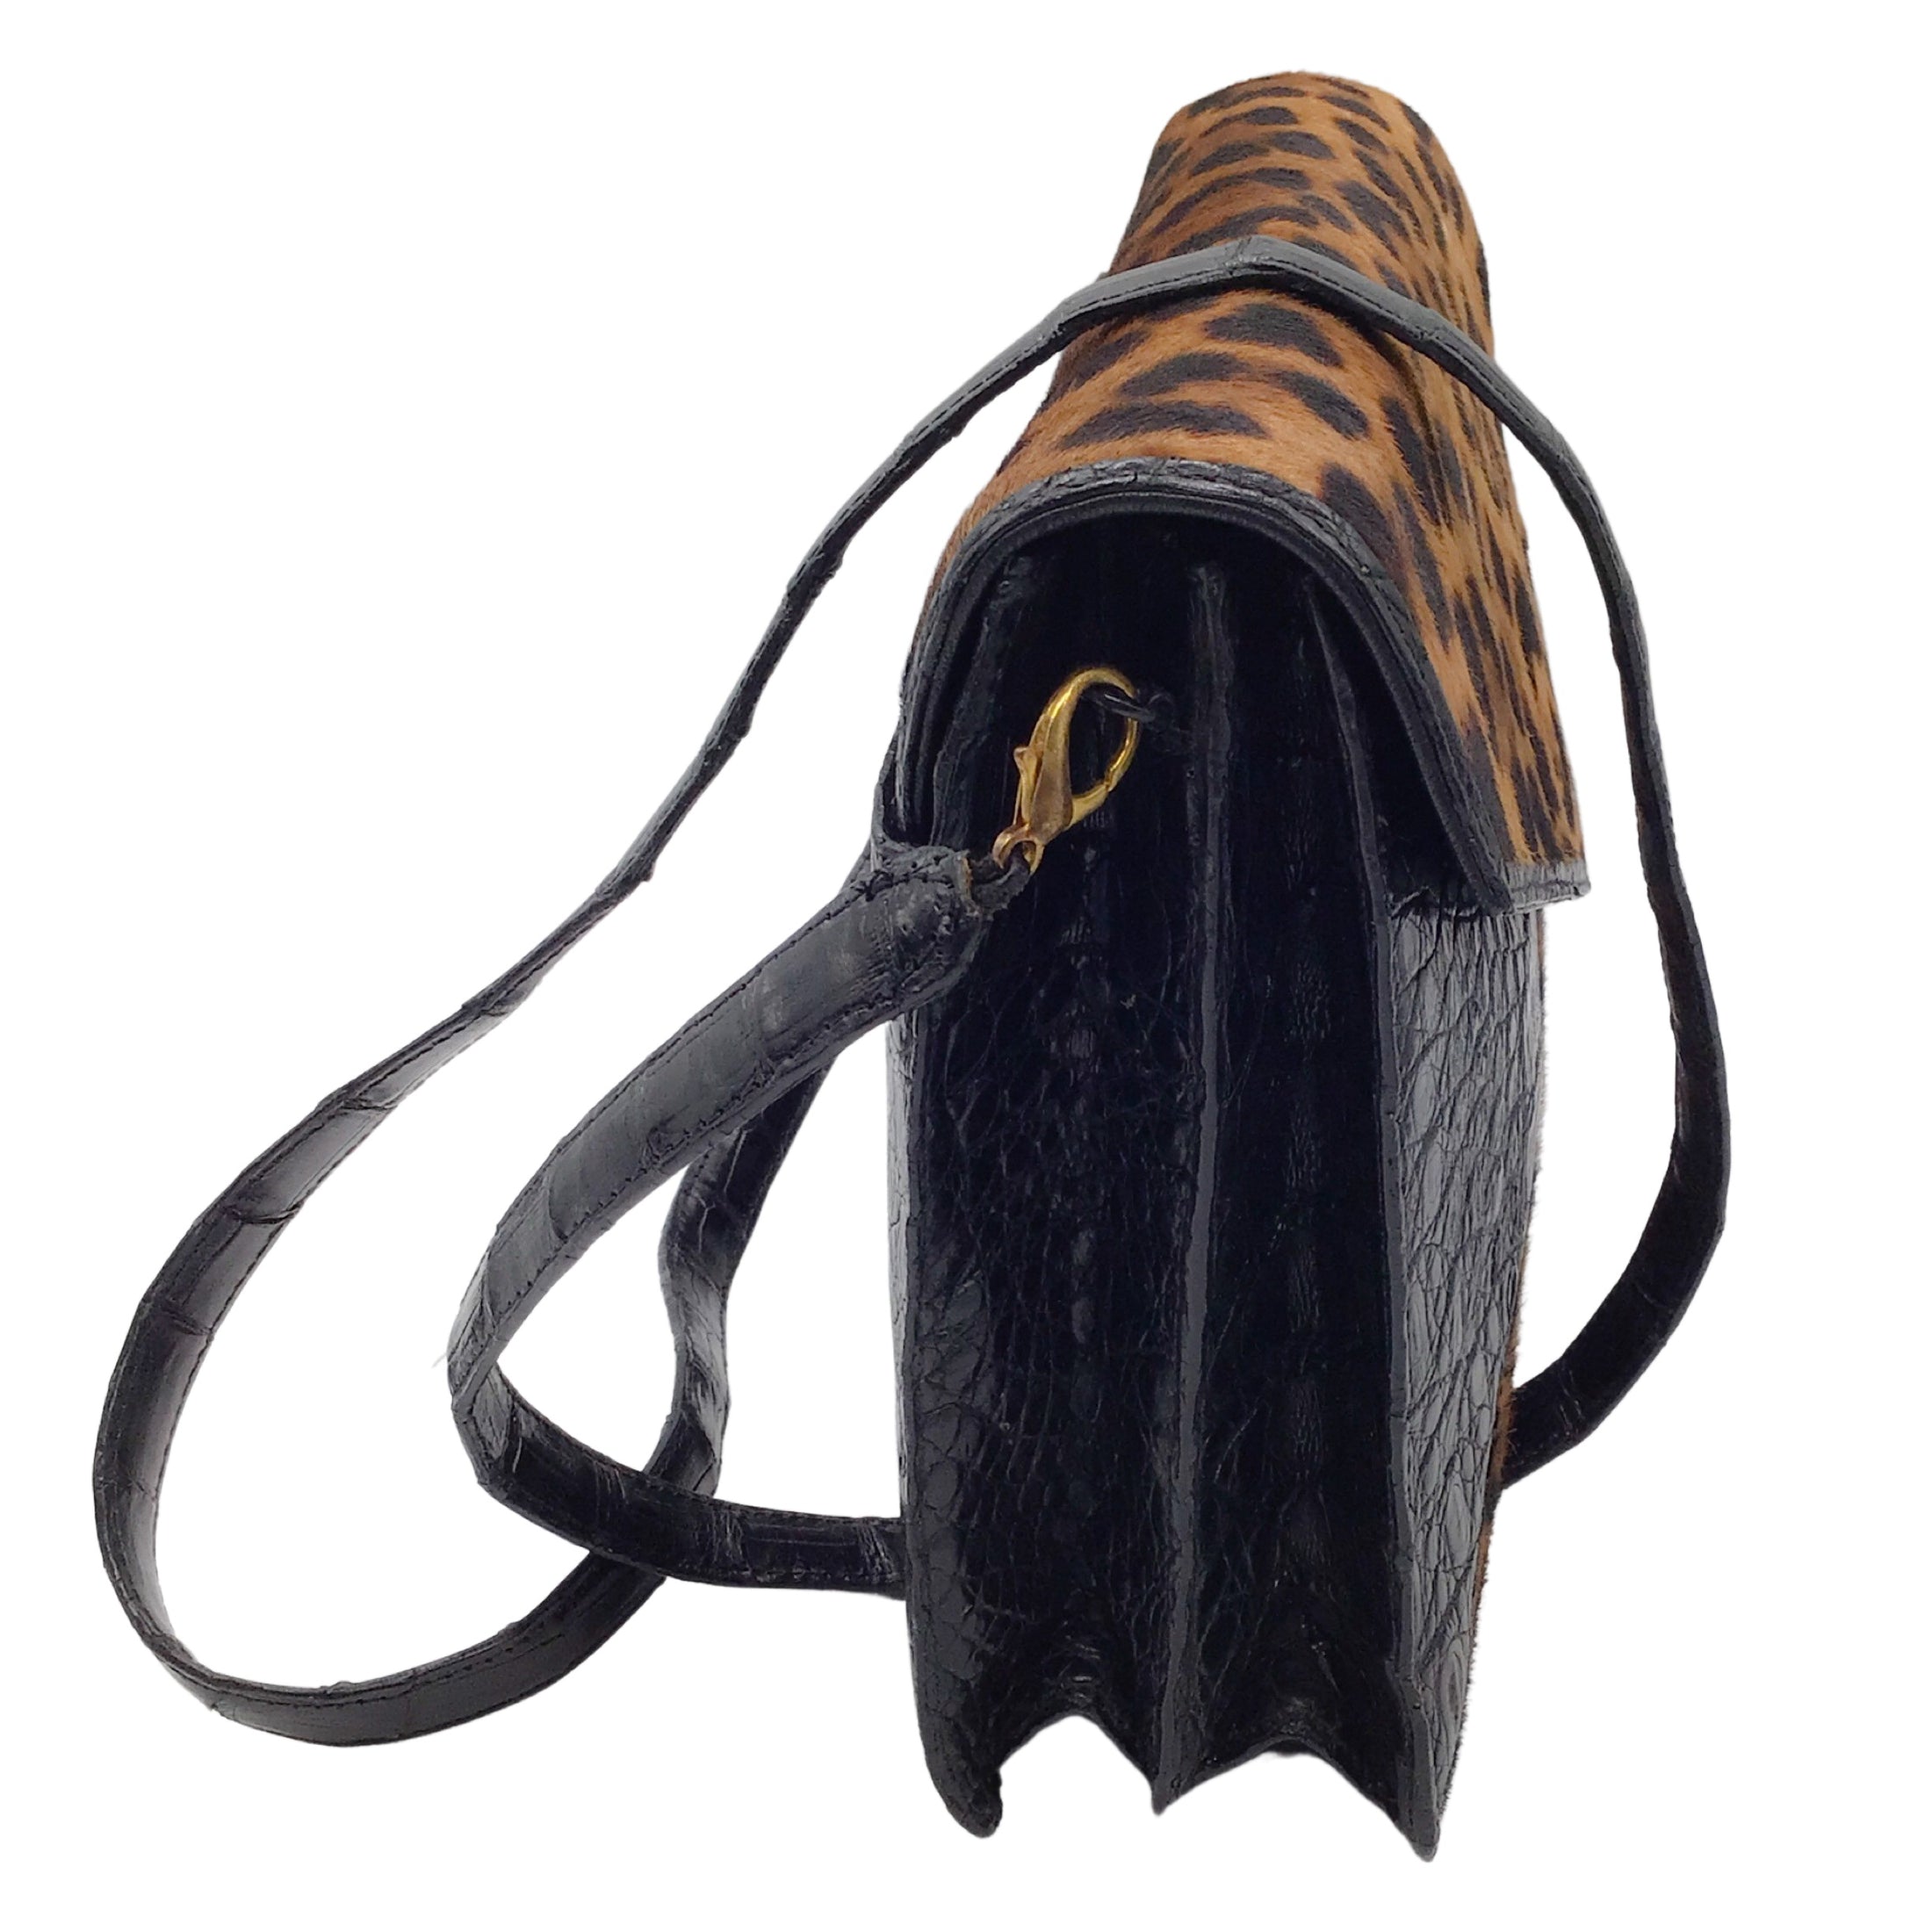 Nancy Gonzalez Black / Brown Leopard Printed Calf Hair and Crocodile Skin Leather Shoulder Bag